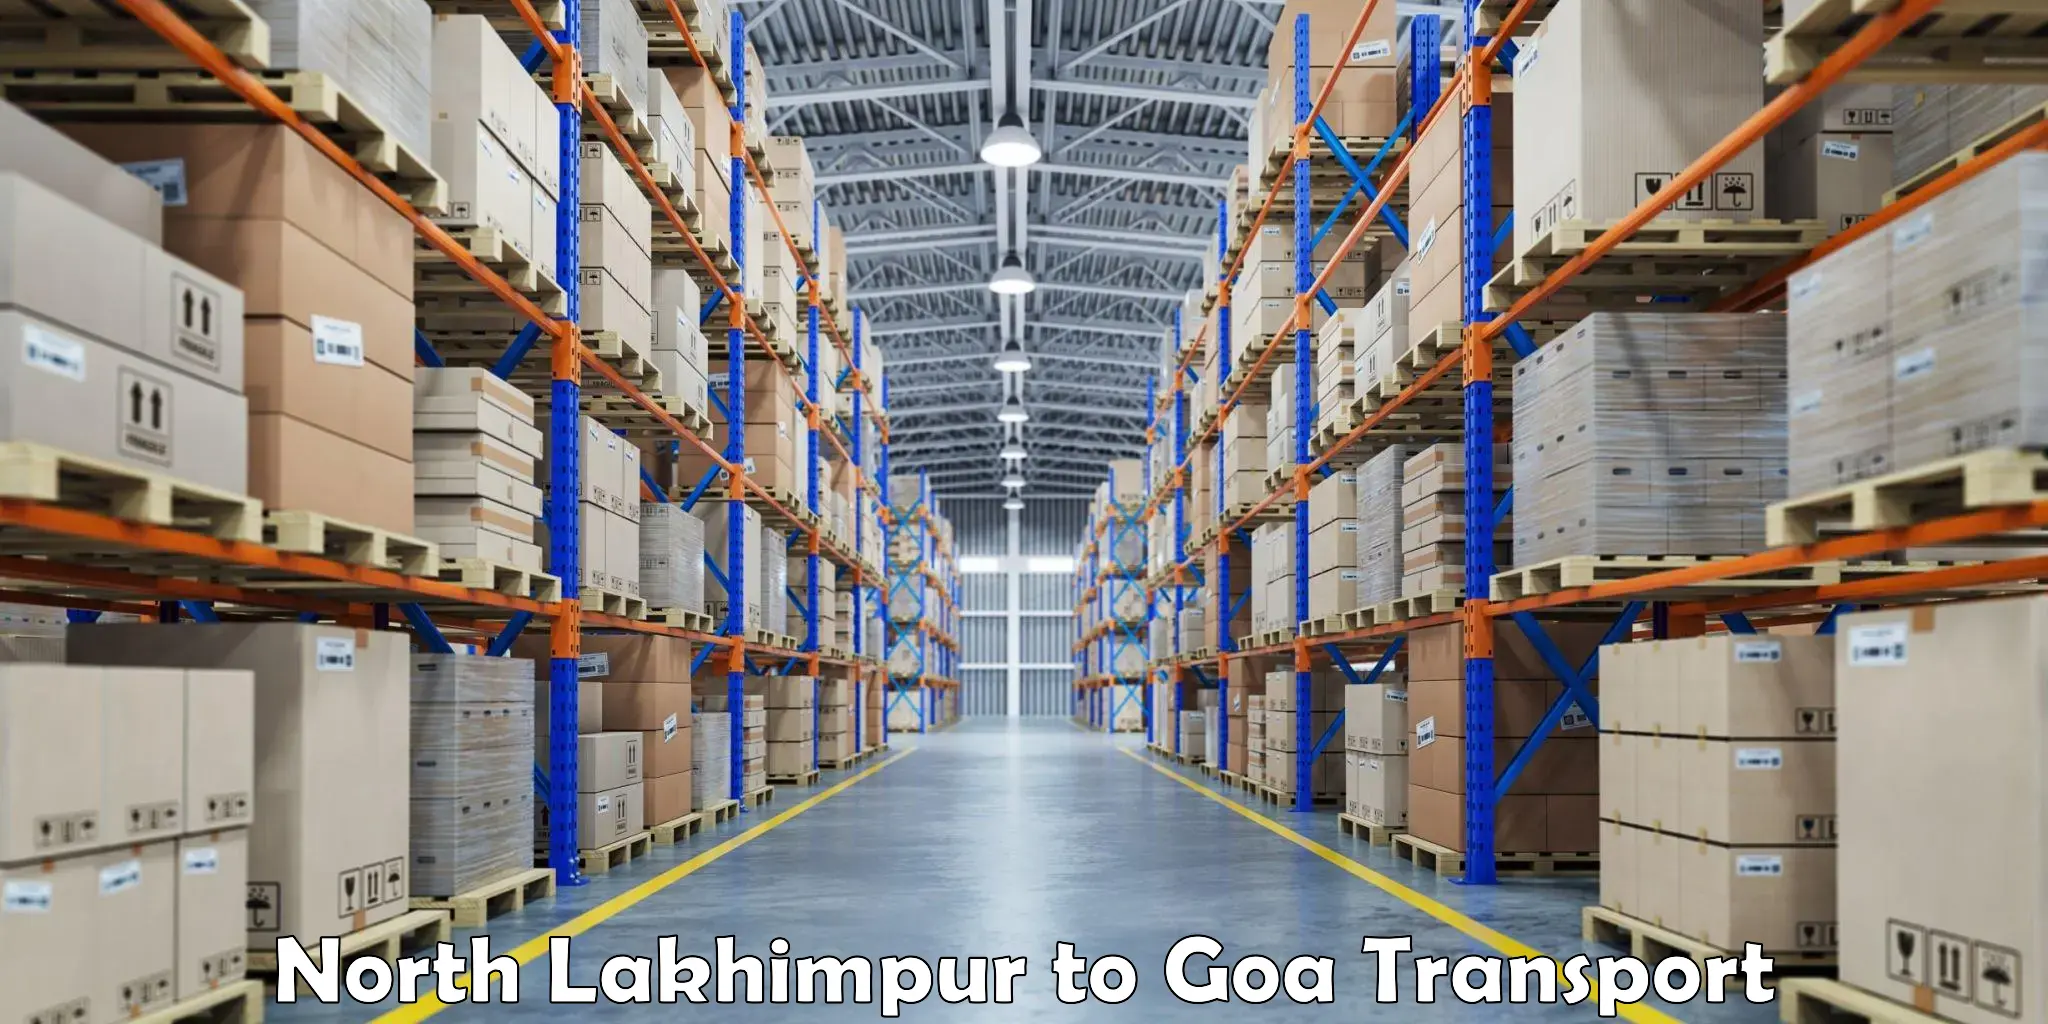 Shipping partner North Lakhimpur to Goa